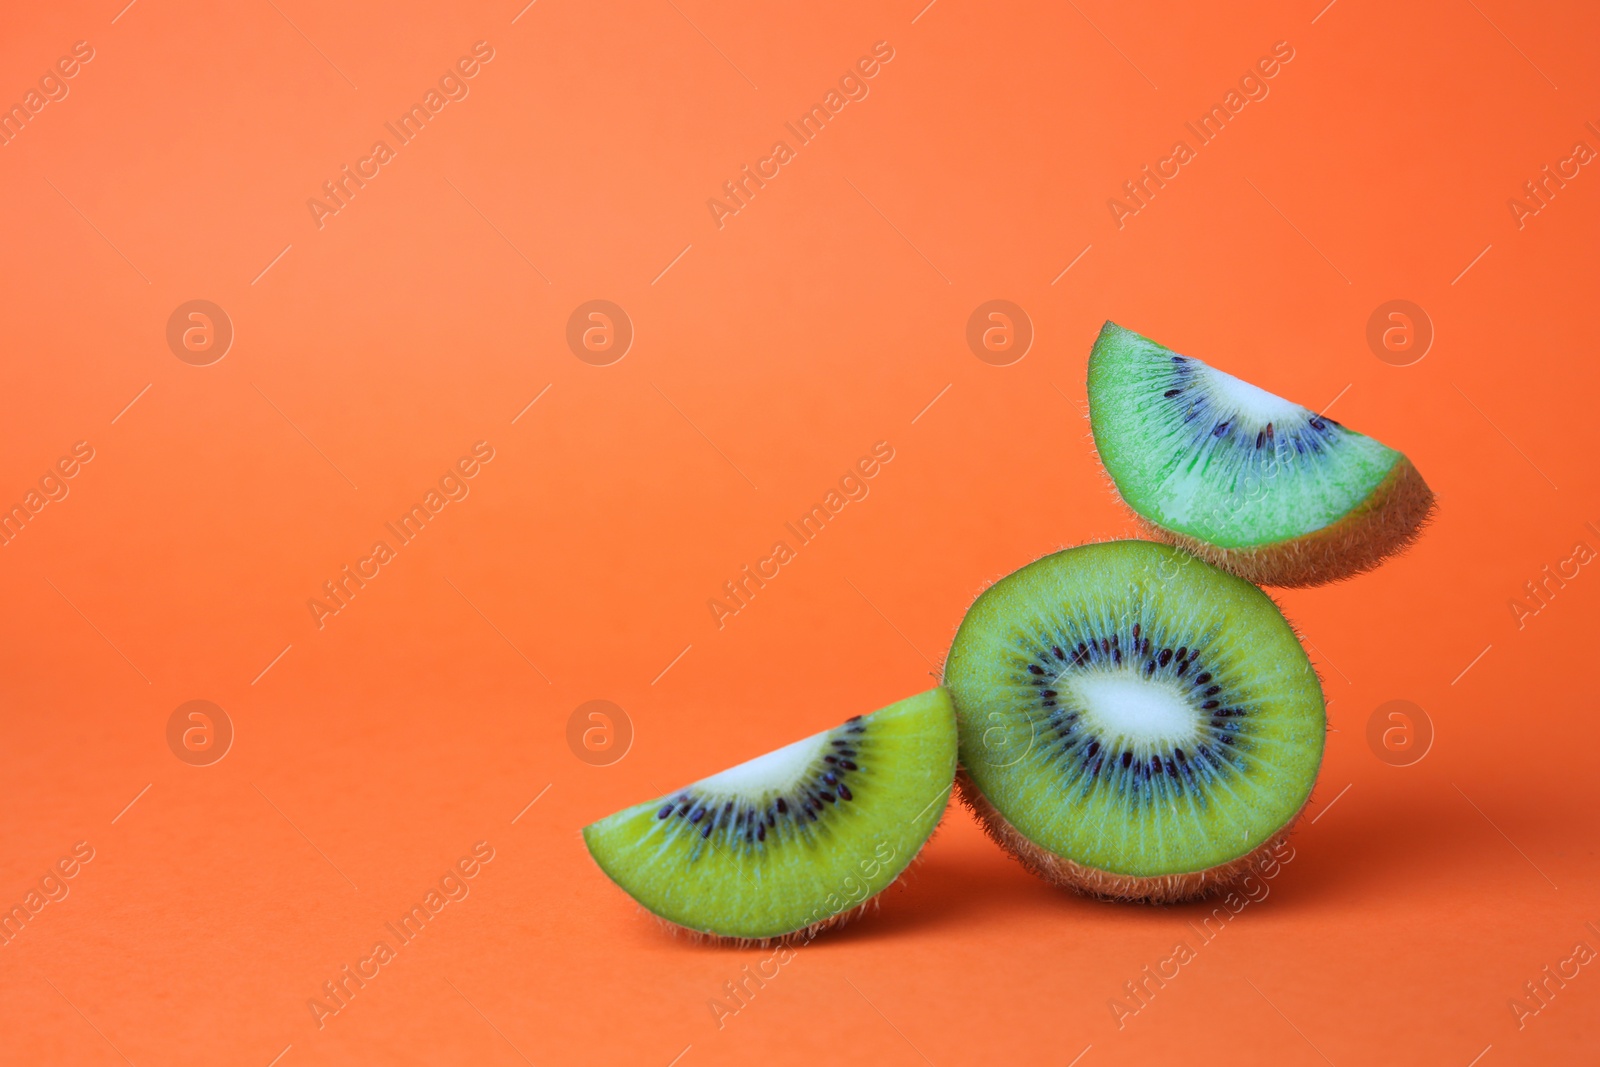 Photo of Cut fresh ripe kiwis on orange background, space for text